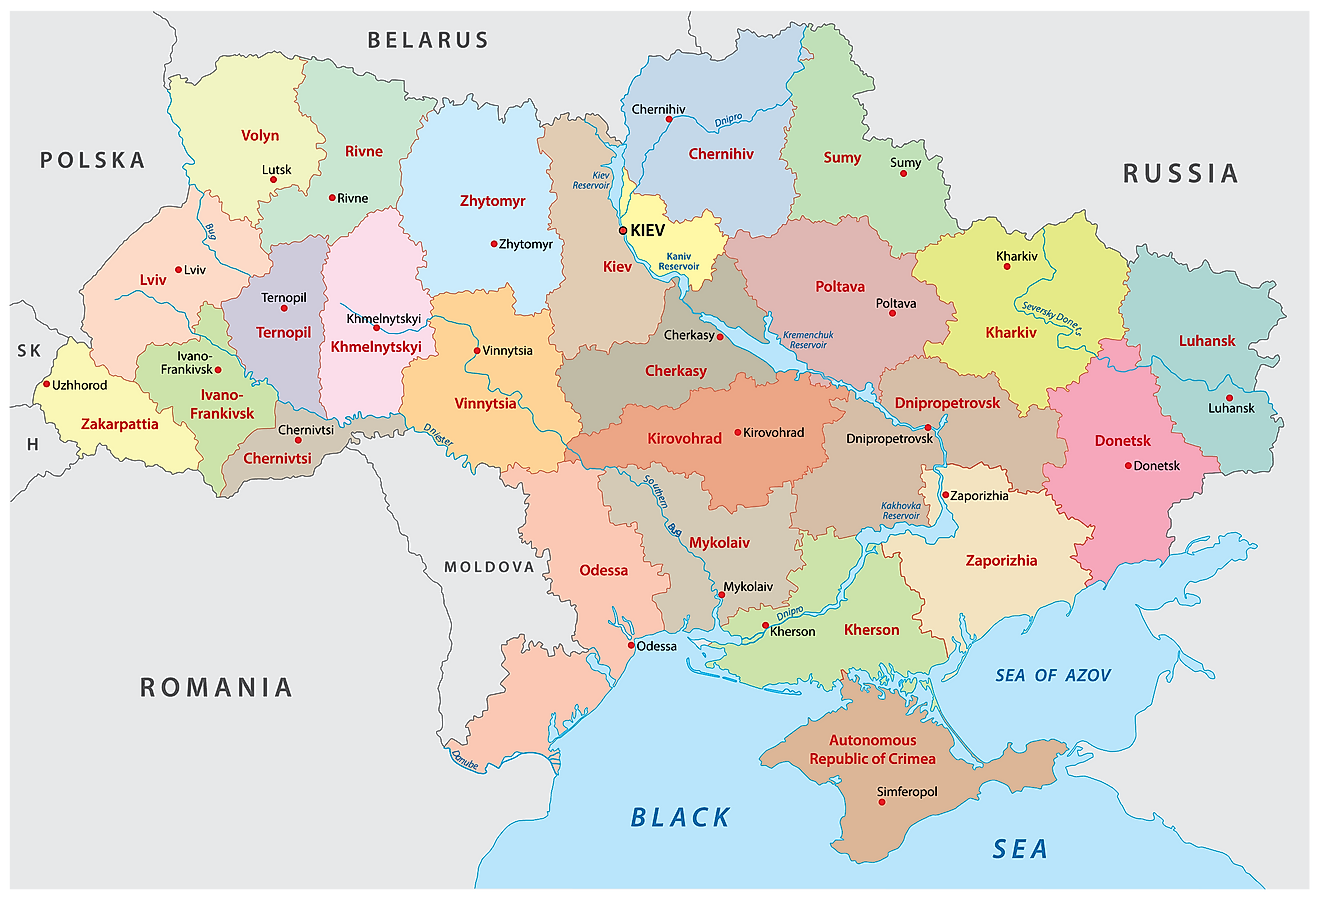 Ukraine Maps & Facts - World Atlas